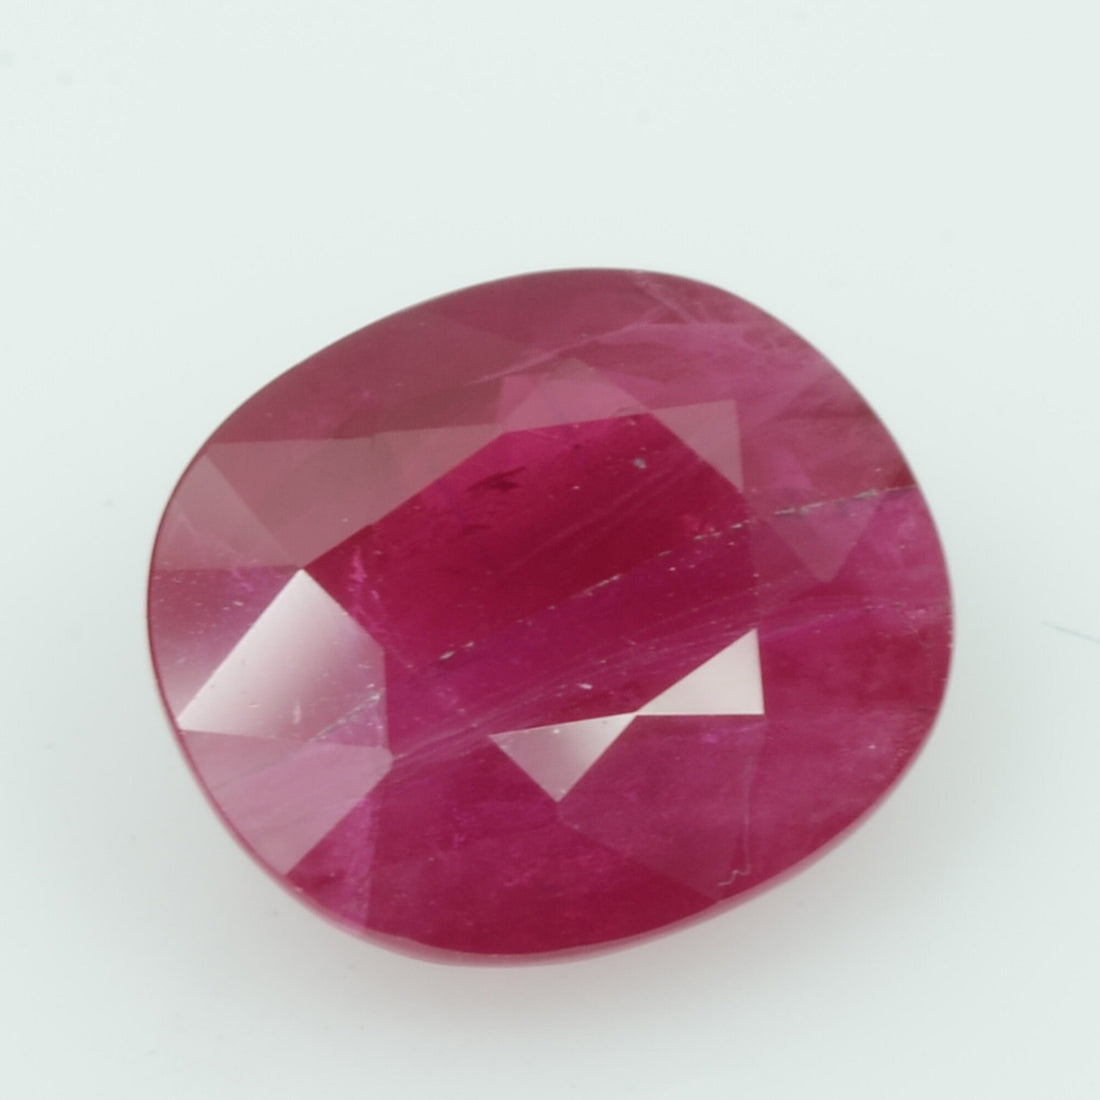 2.15 cts Natural Burma Ruby Loose Gemstone Oval Cut